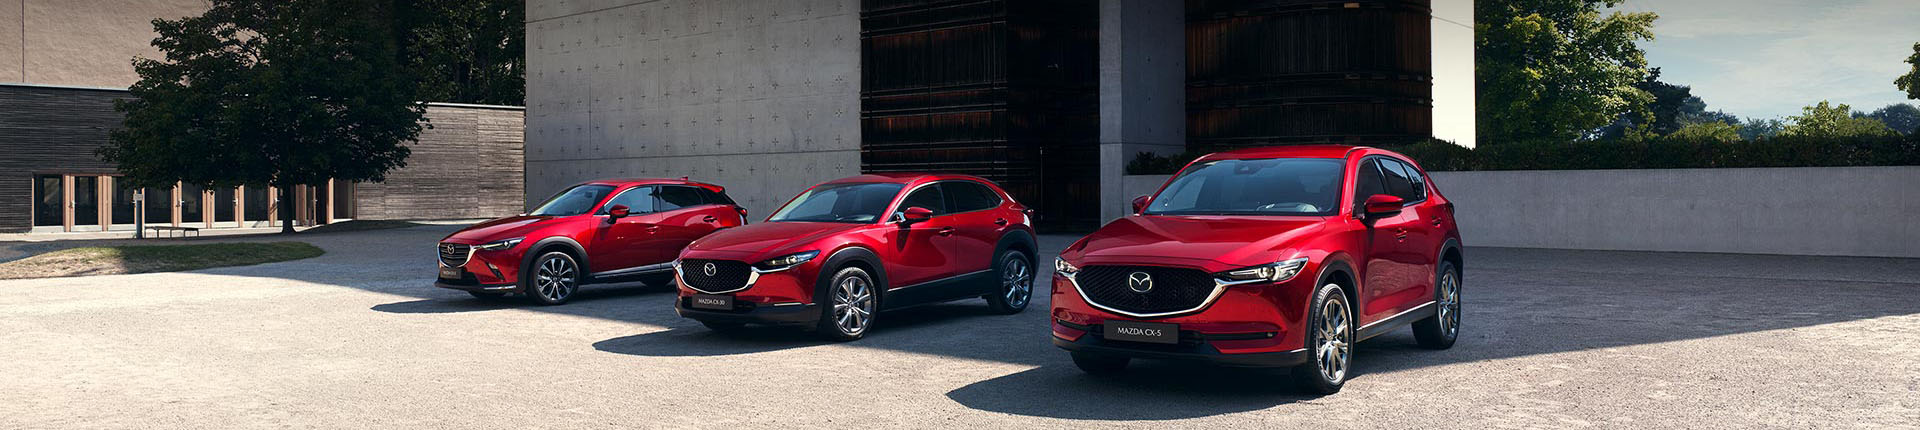 Mazda Akce - Bonus za výkon